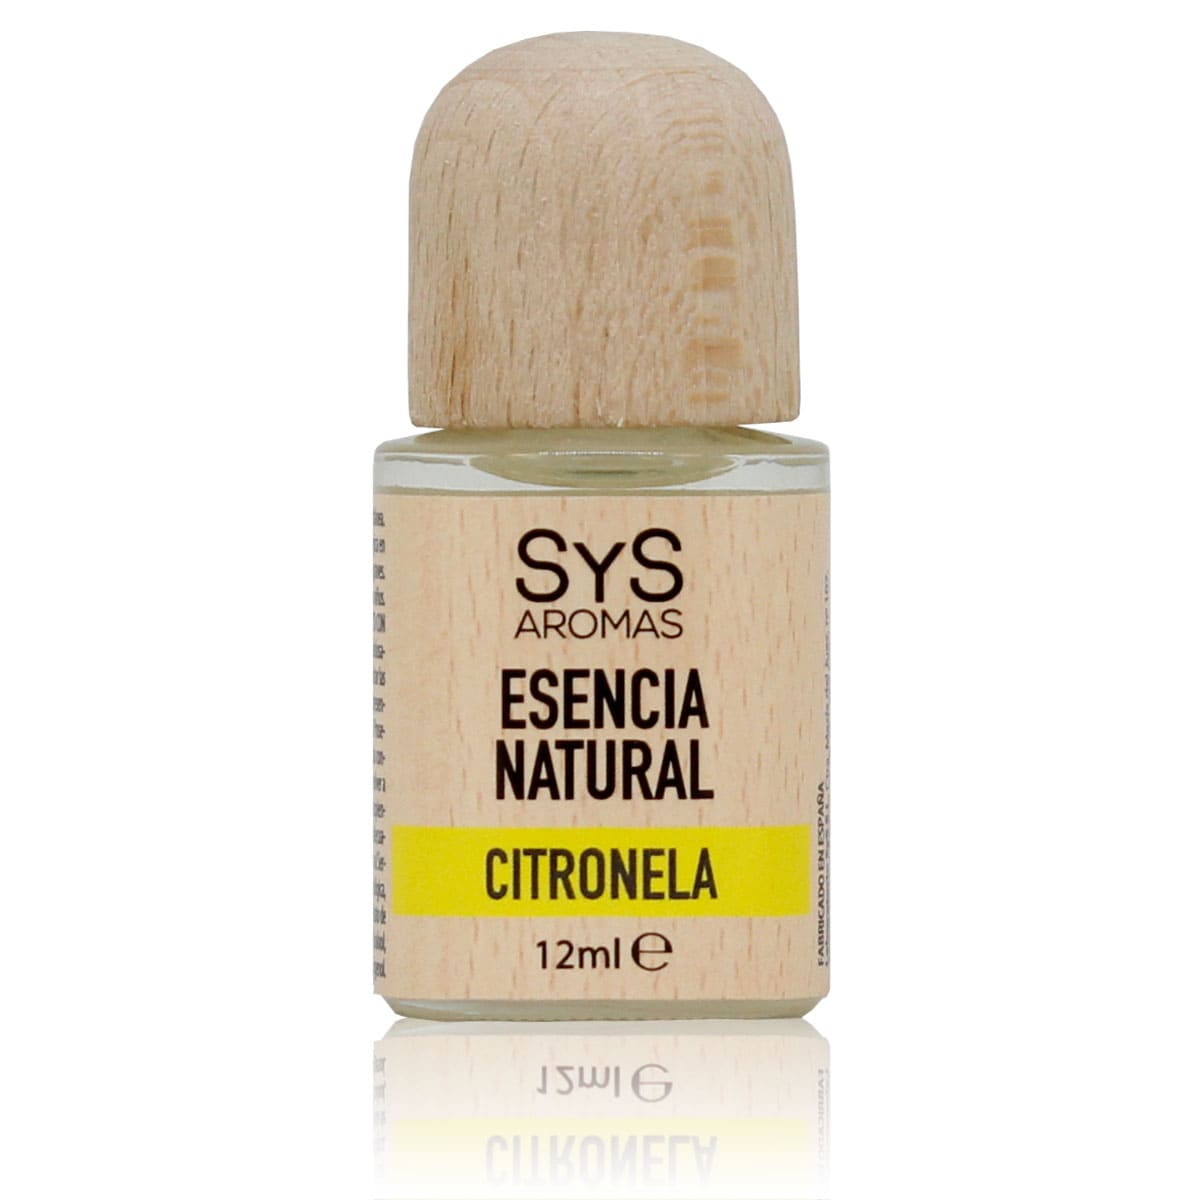 Buy Citronella Essence 12ml SYS Aromas